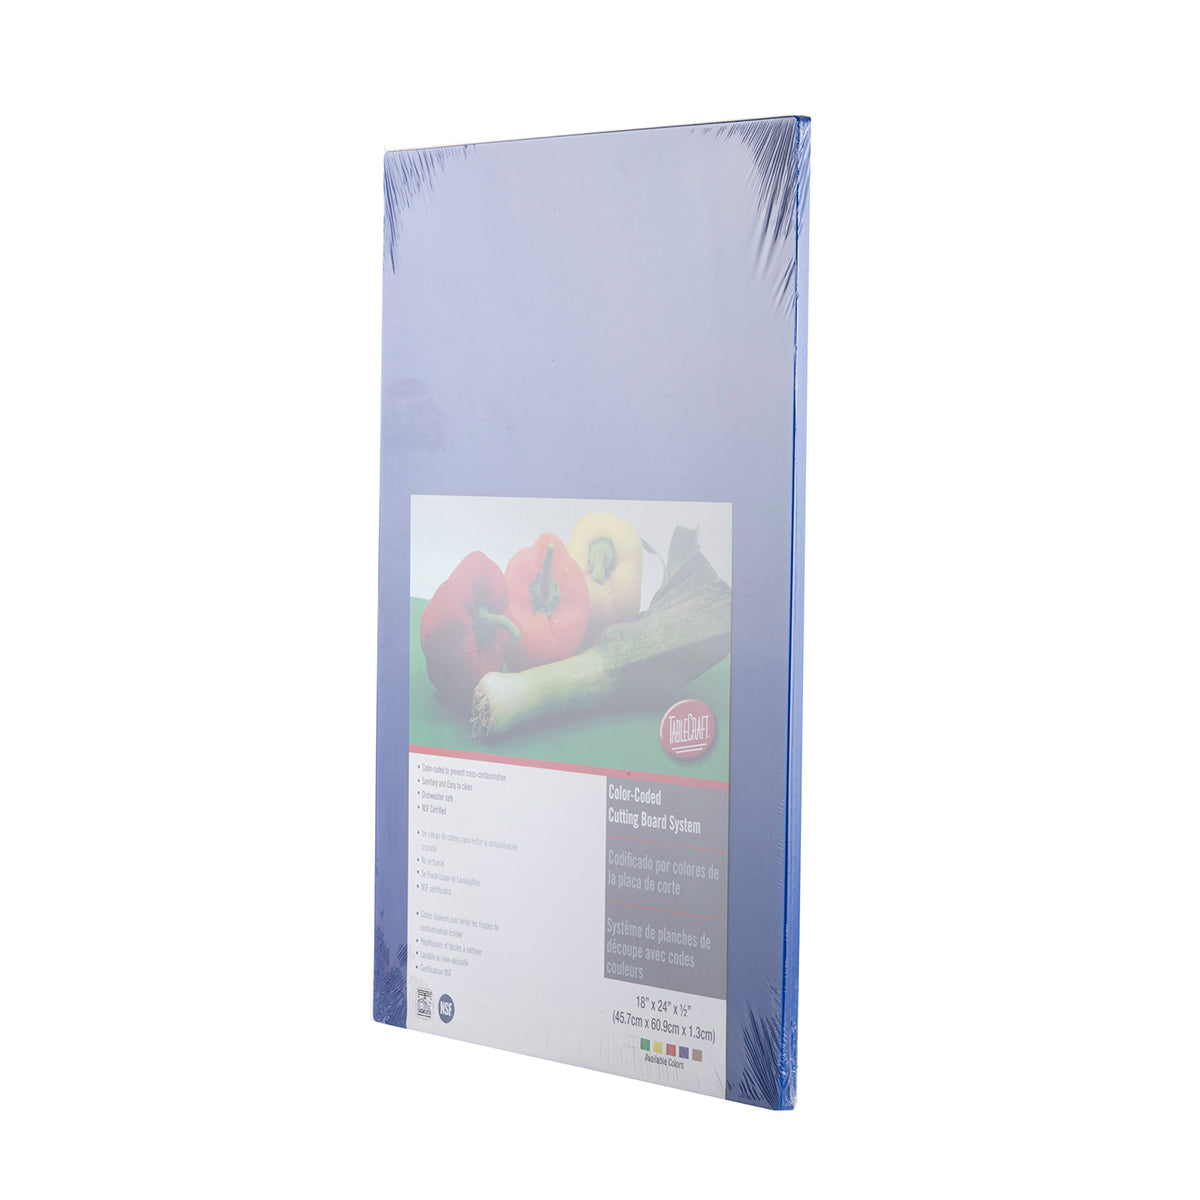 Tabla para Picar de Plástico Azul de 46 x 61 cm NFS